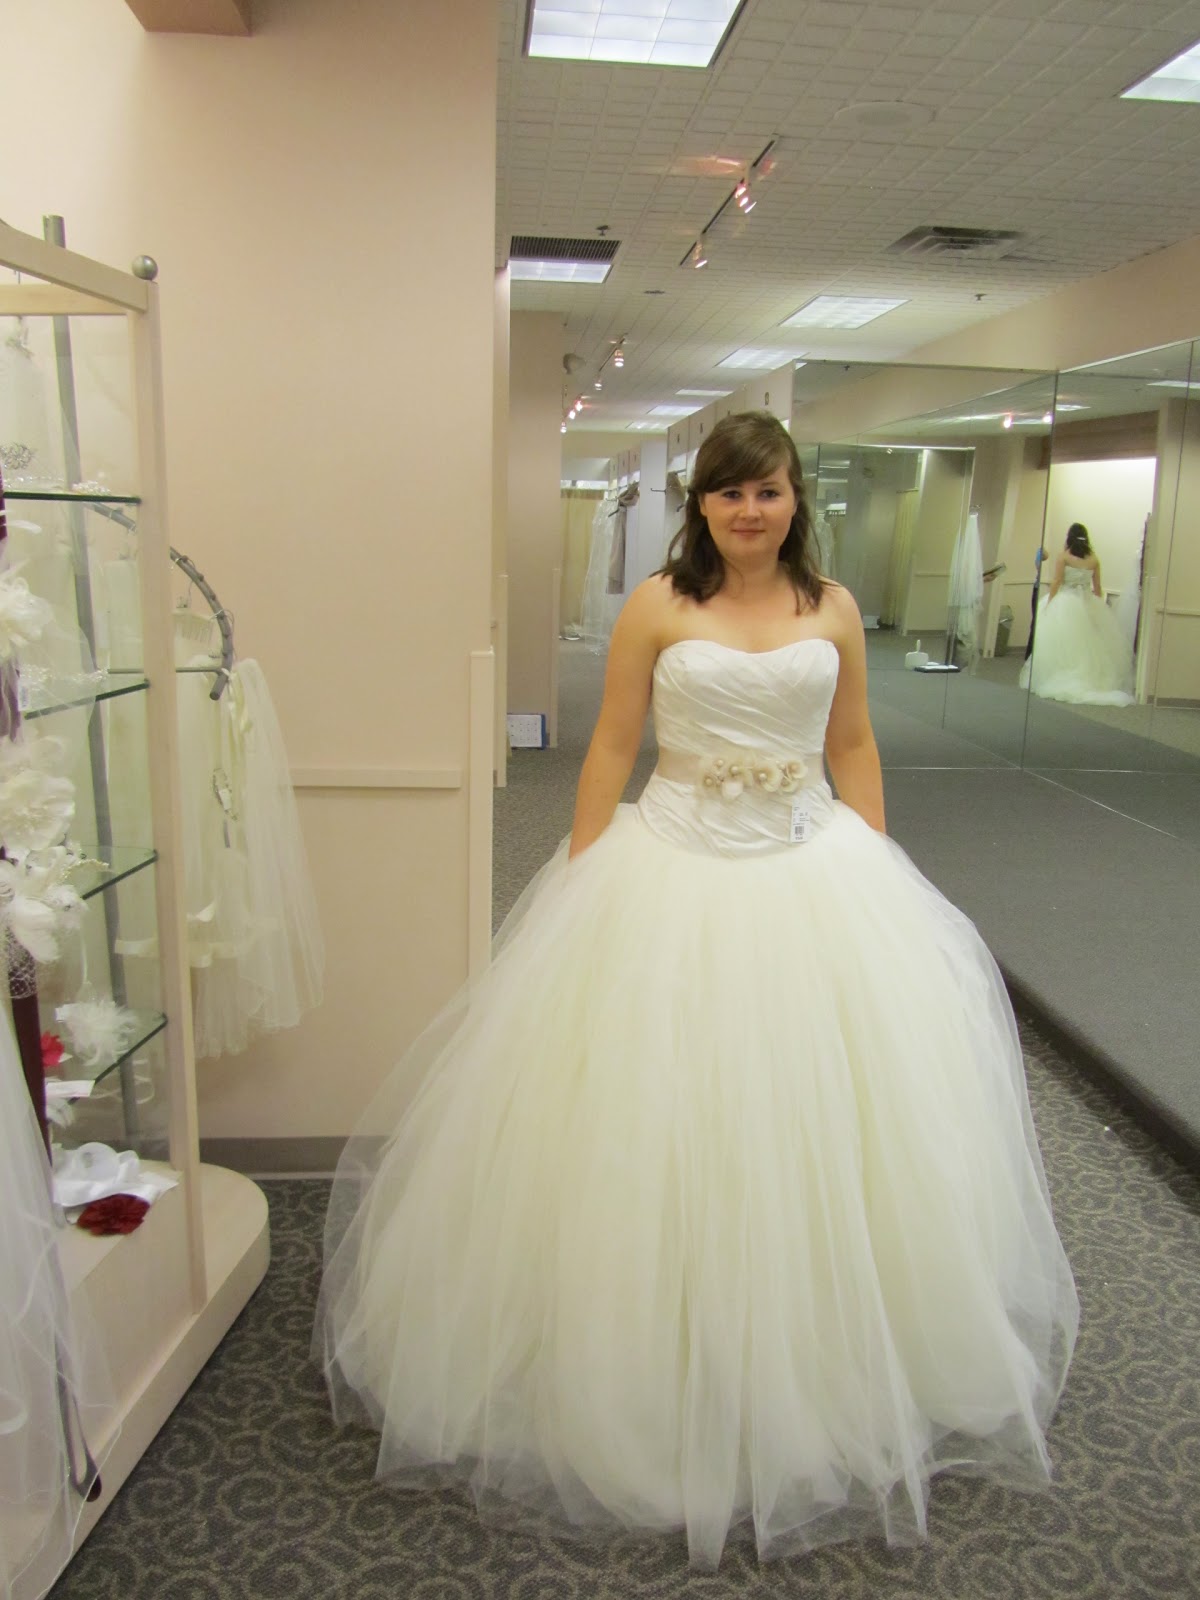 Saying No to the Dress : wedding chicago wedding dress Img 11907 IMG_11907